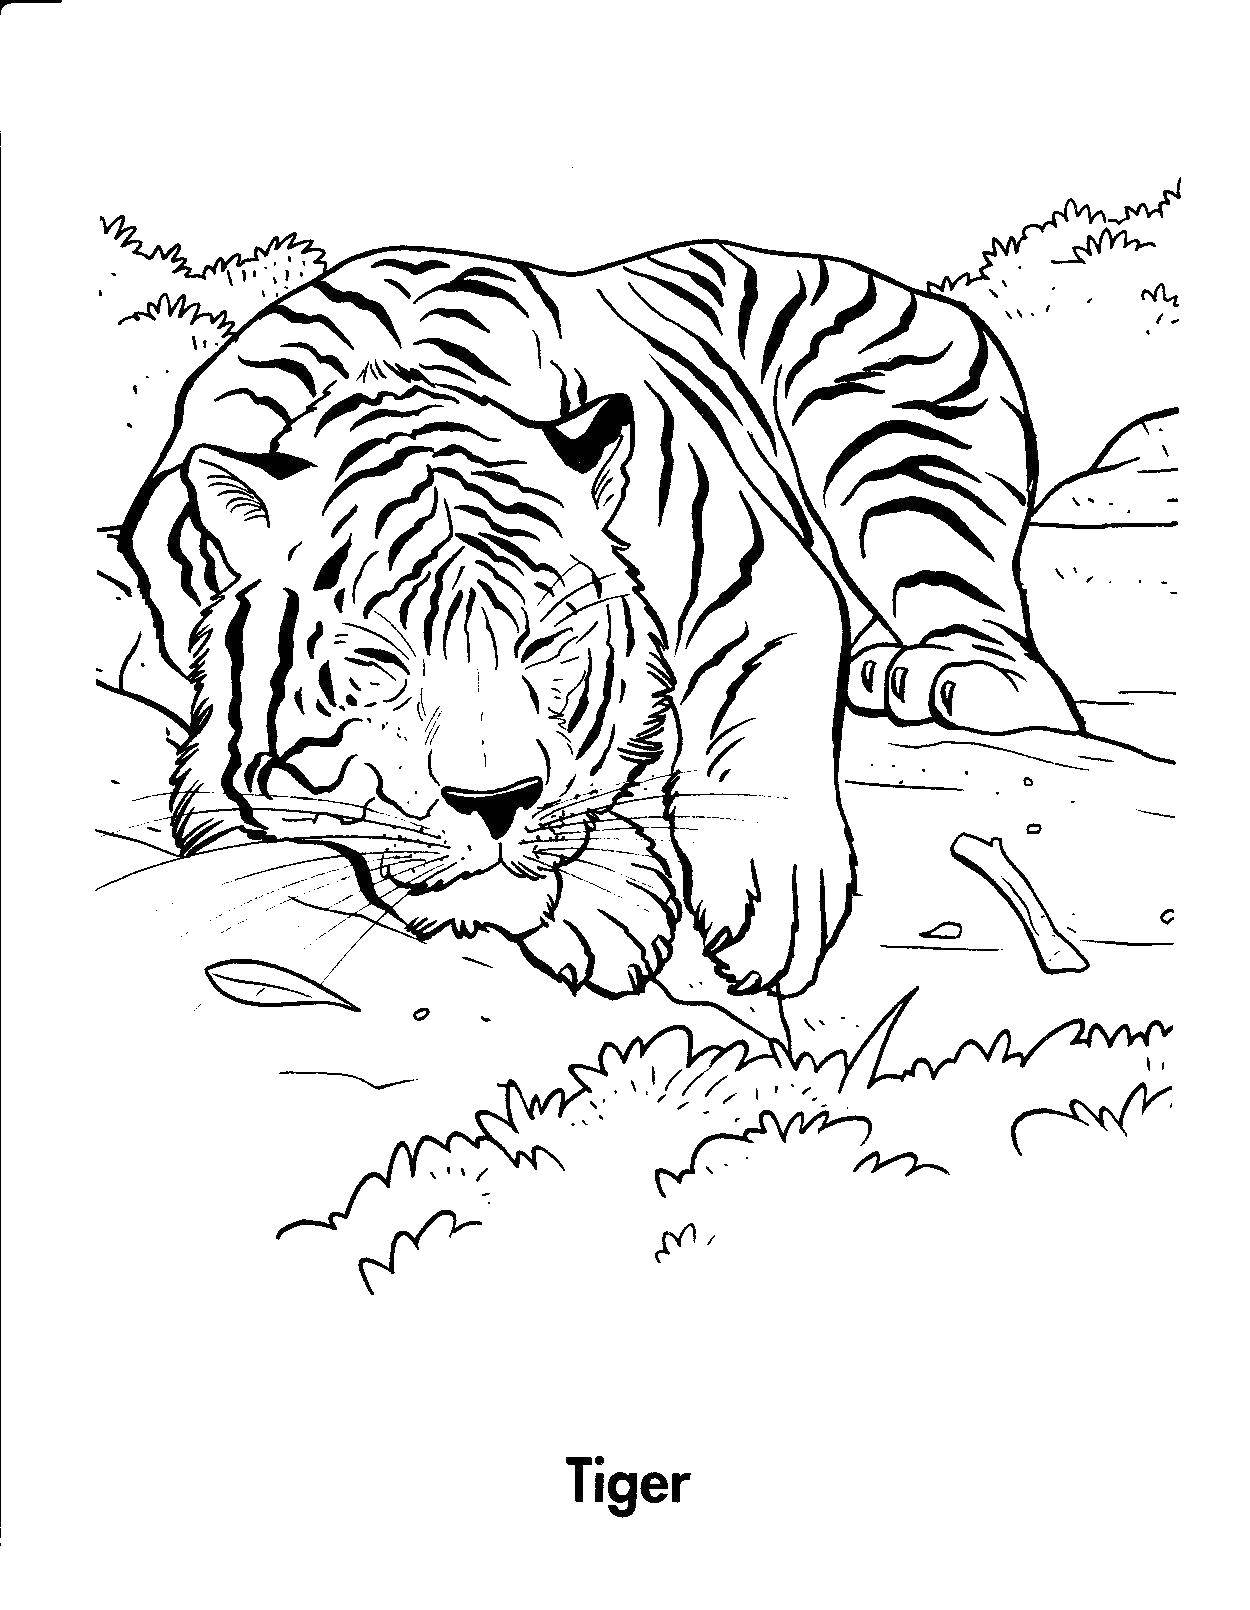 Coloring The tiger sleeps. Category Sleep. Tags:  sleep, tiger, animals.